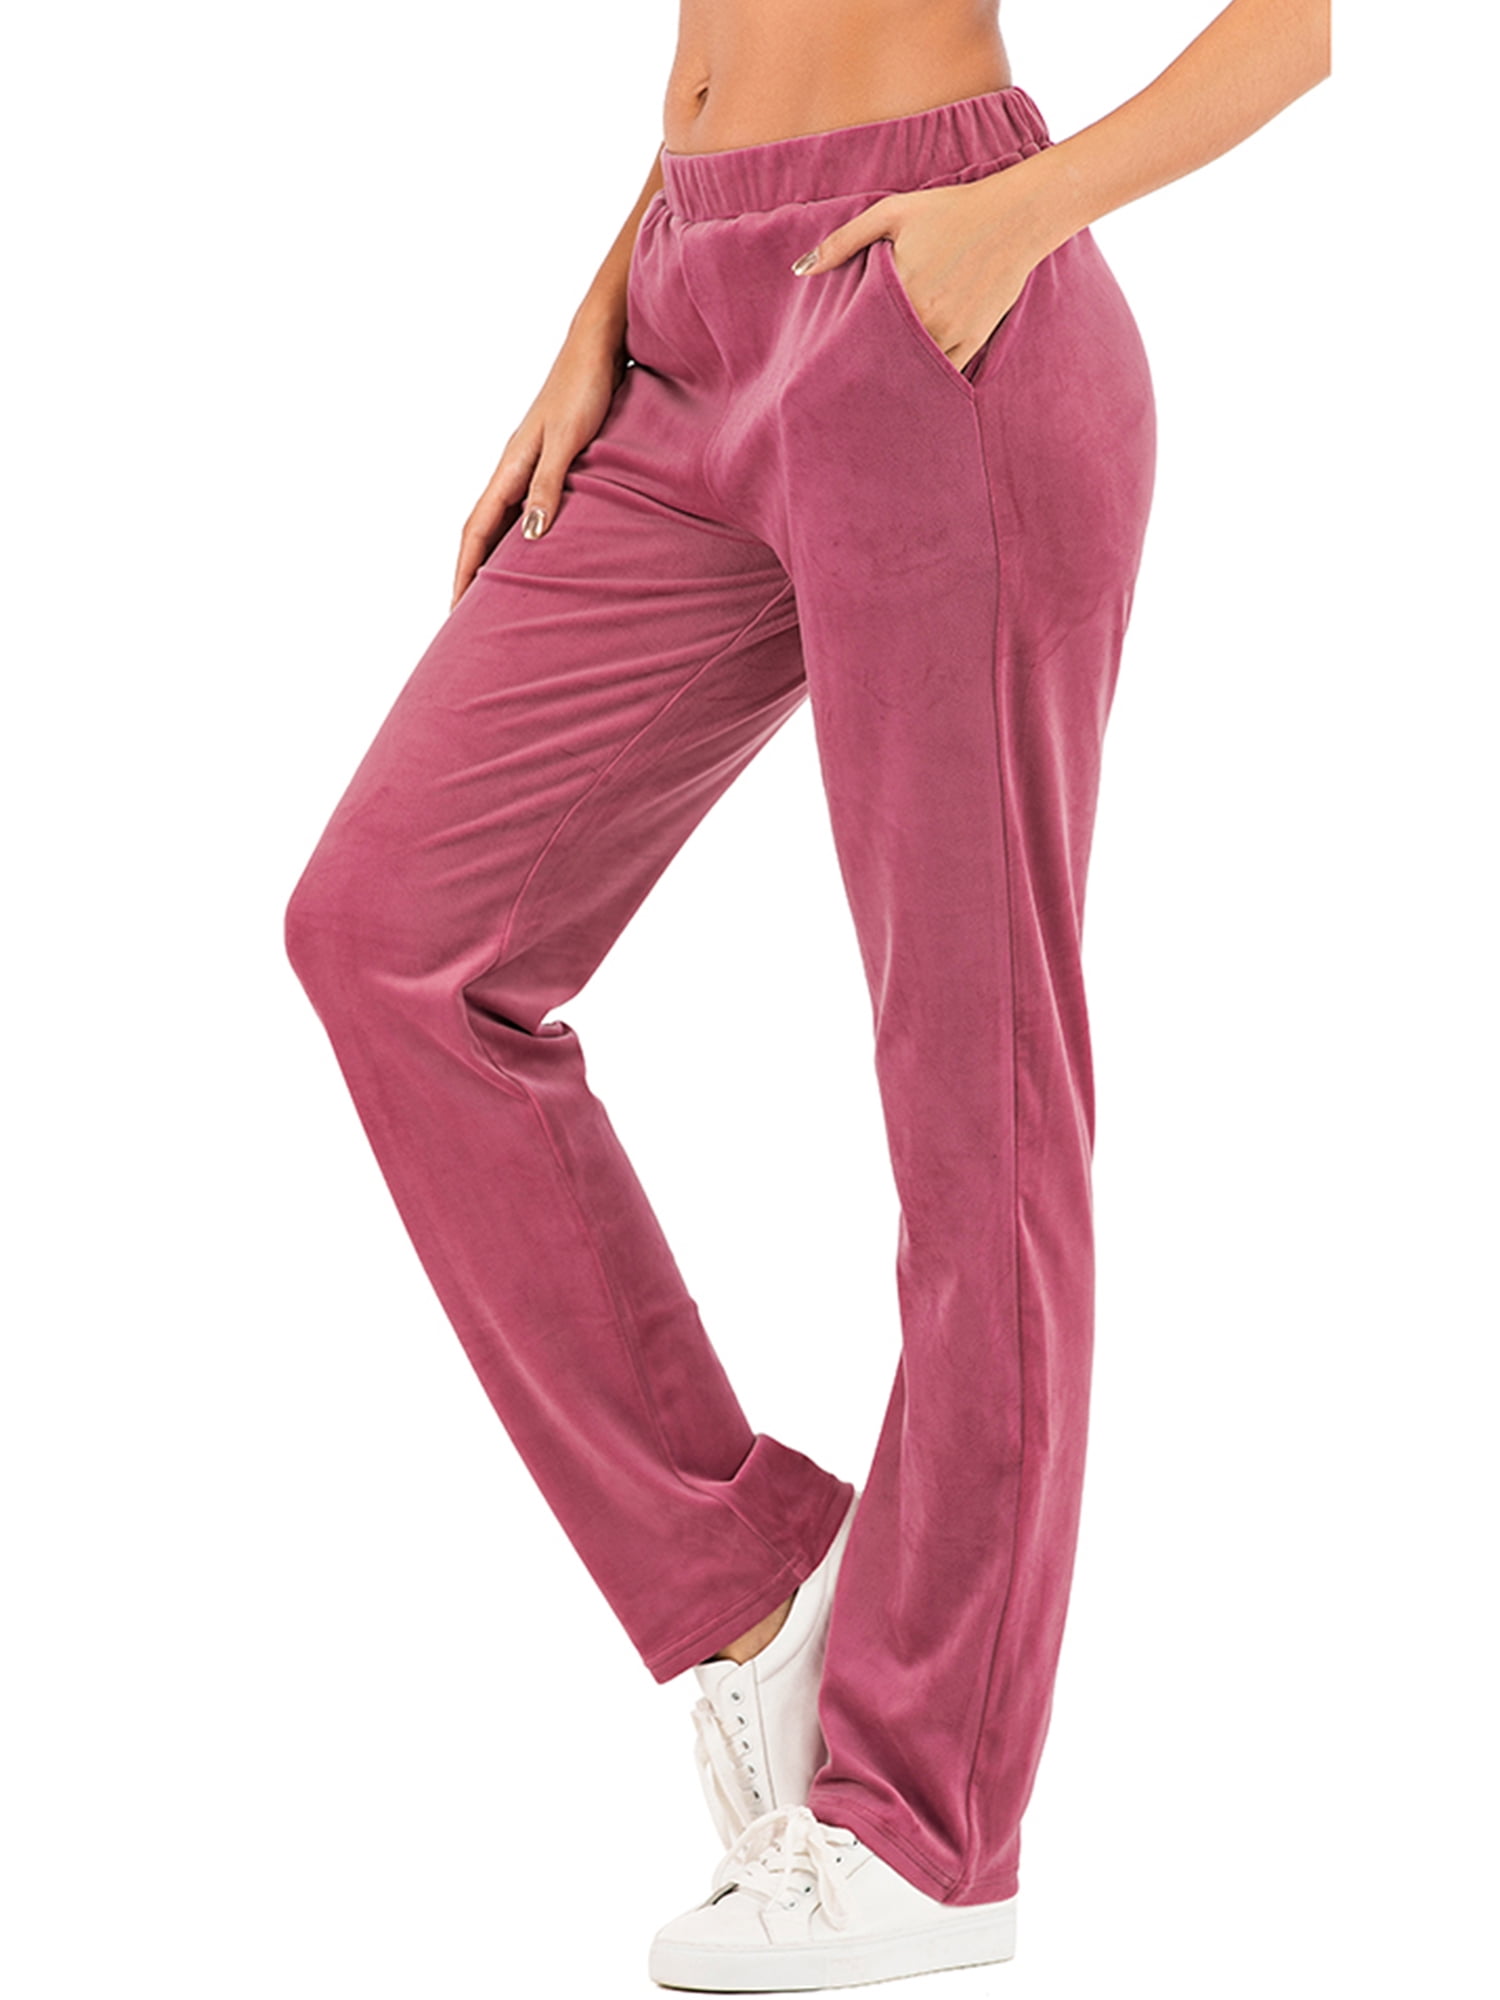 JOYOUS LUCKY High Waist Capri Pants with Pockets Women's Cropped Yoga Running Lounge Workout Sports Sleep Pajama